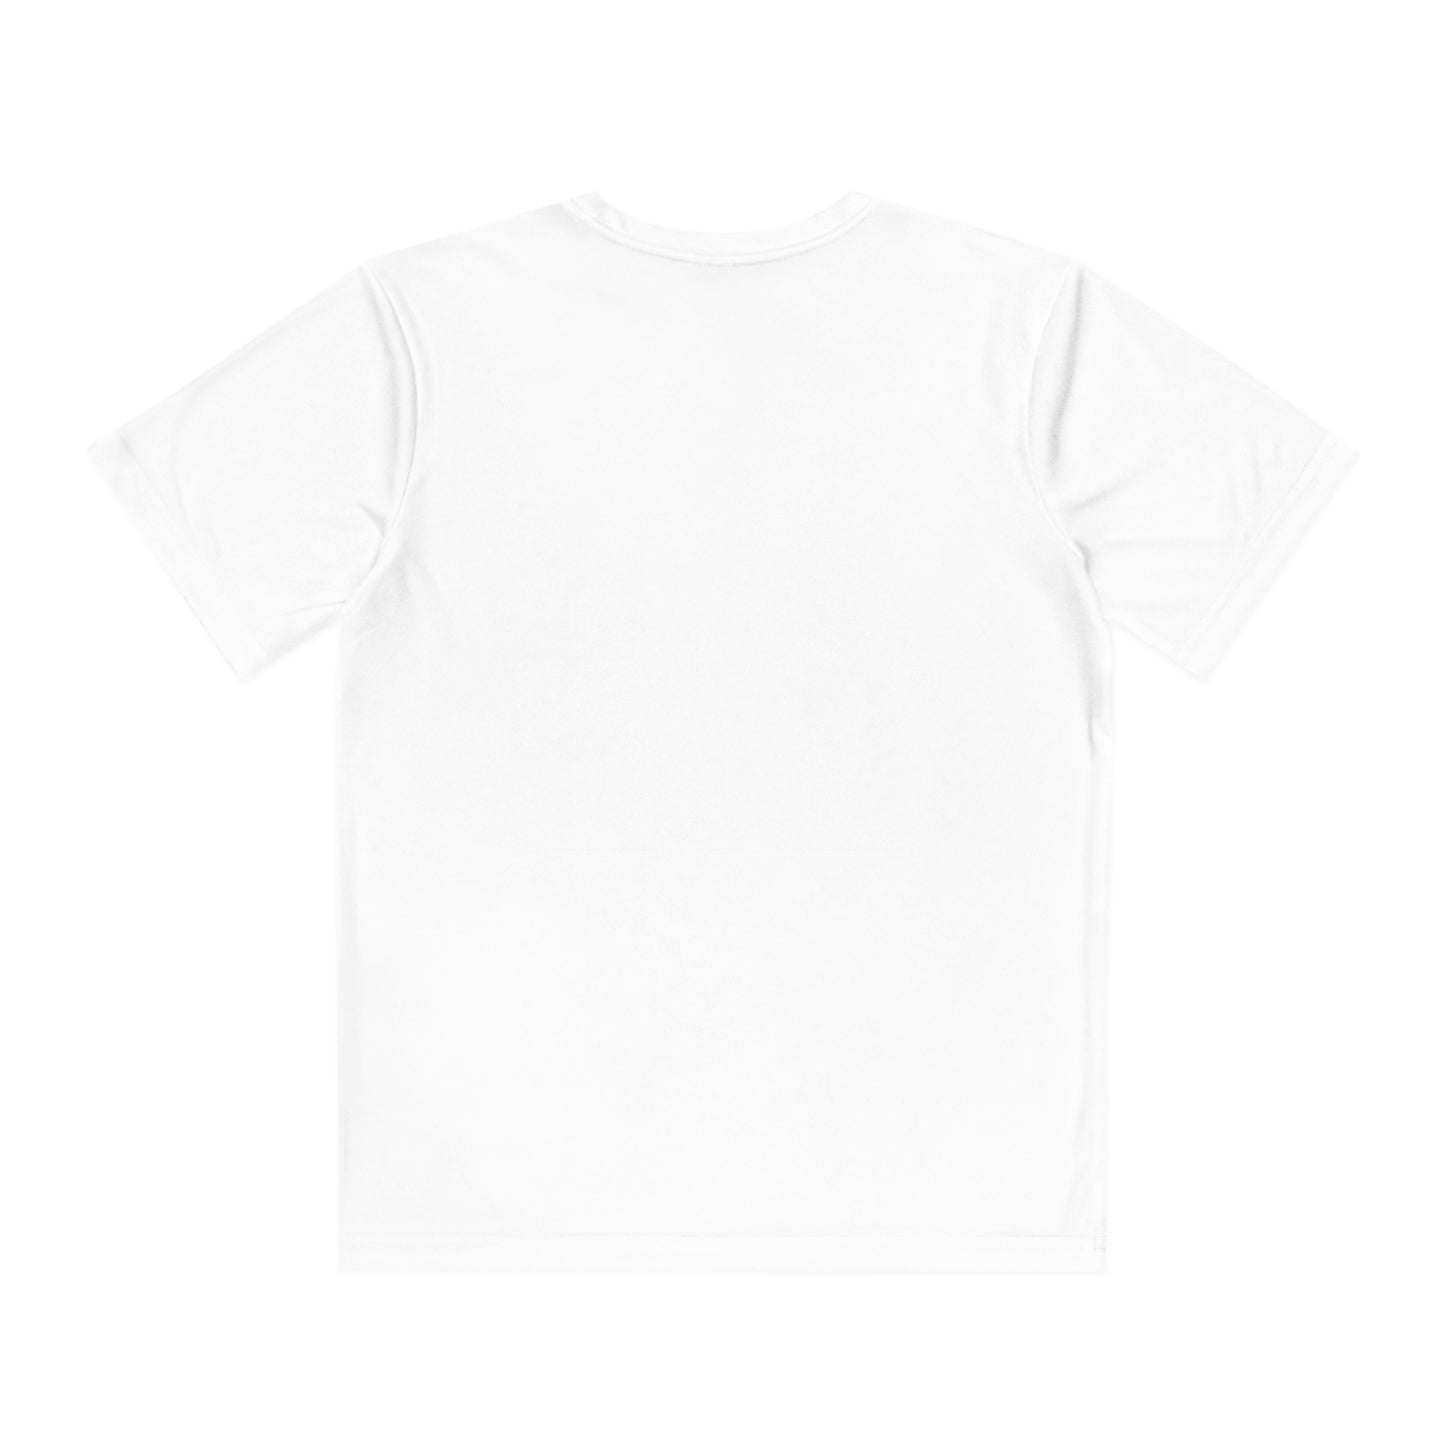 YOUTH - "Blackout Baseball" Moisture-Wicking T-Shirt - (Black, White, or Gray)